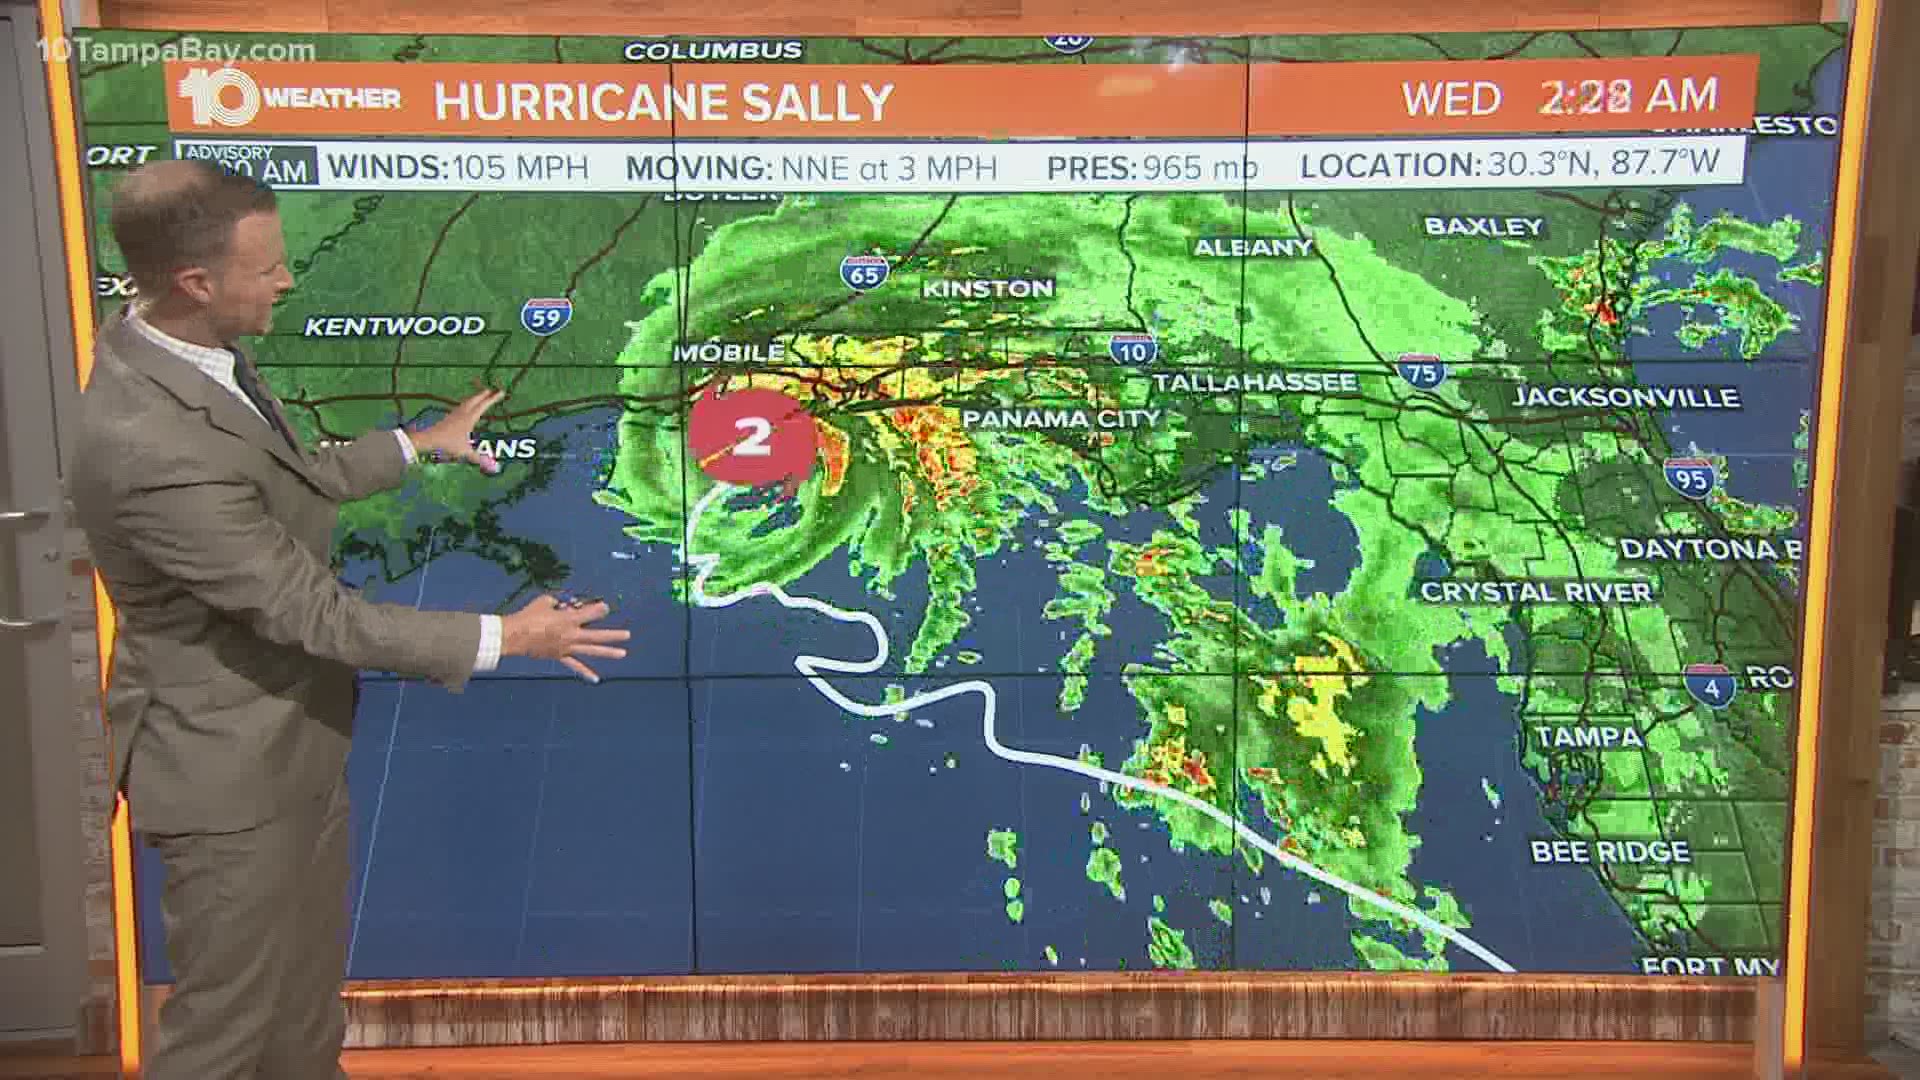 Hurricane Sally made landfall at 6 a.m. EST near Gulf Shores, Alabama as a Category 2 storm.